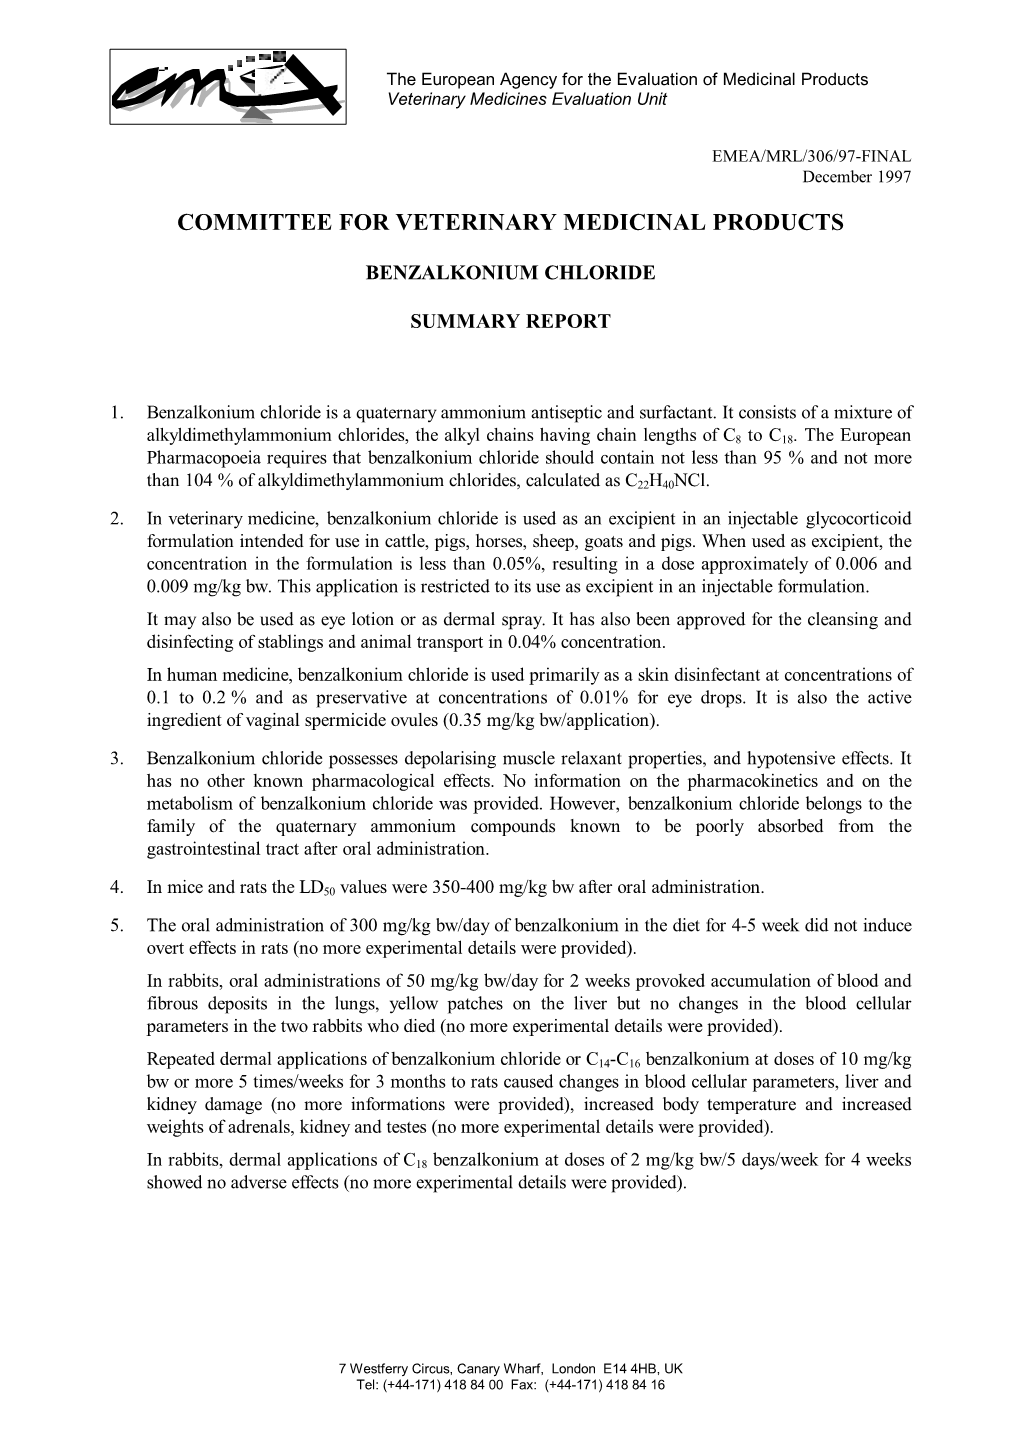 Benzalkonium-Chloride-Summary-Report-Committee-Veterinary-Medicinal-Products En.Pdf